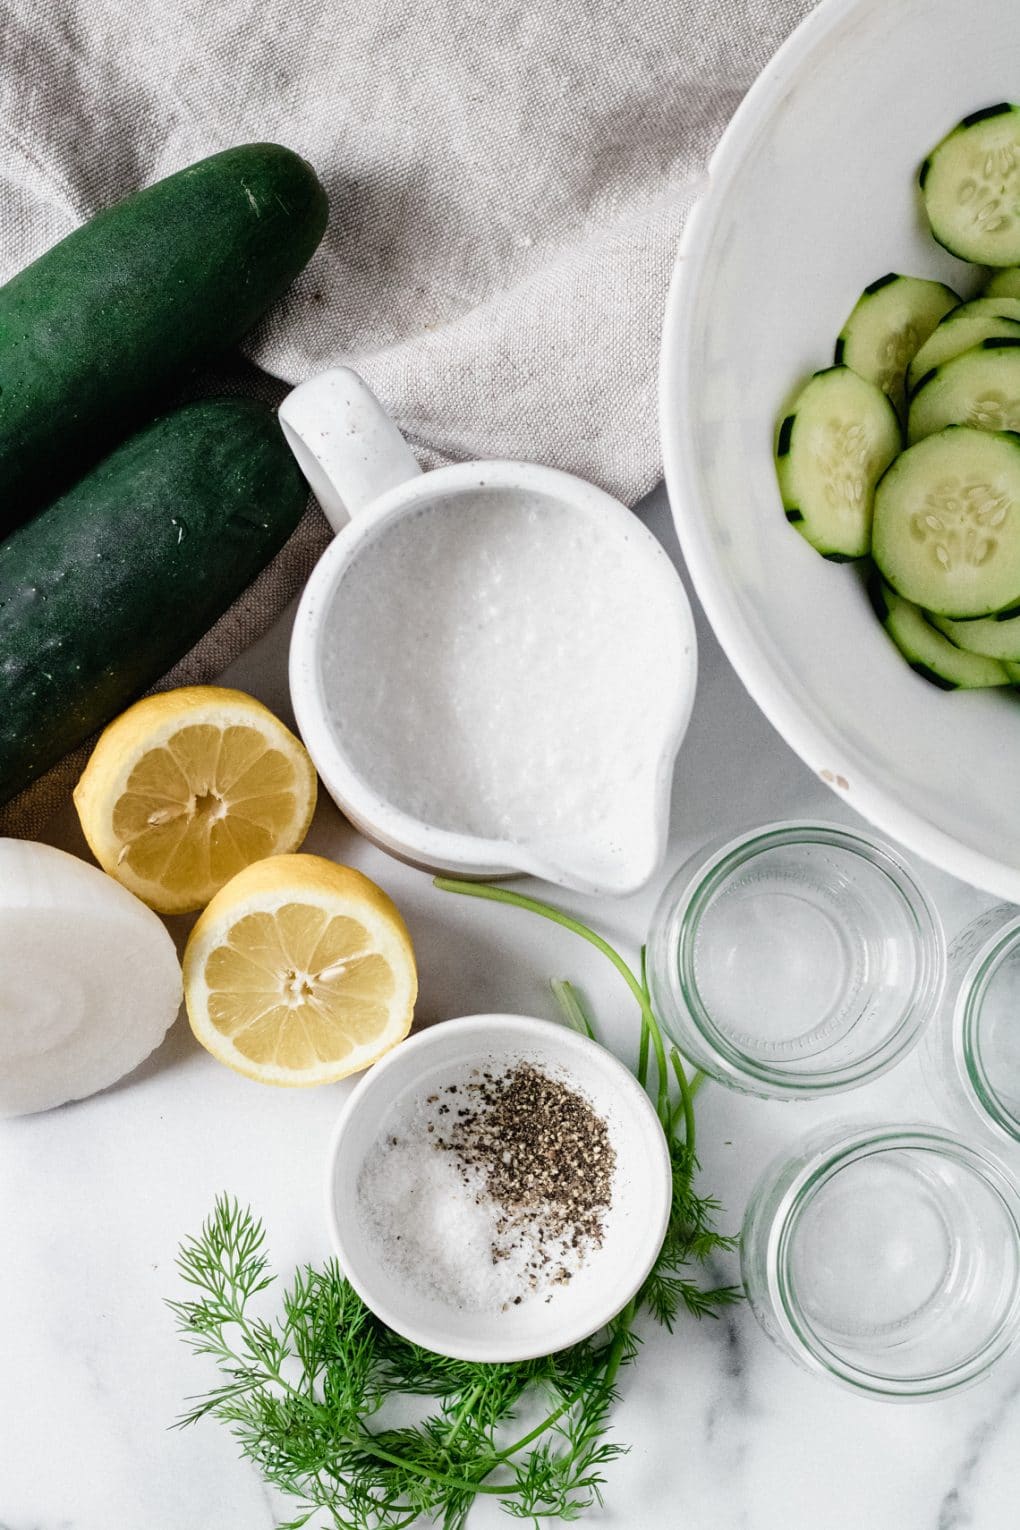 ingredients to make creamy cucumber salad